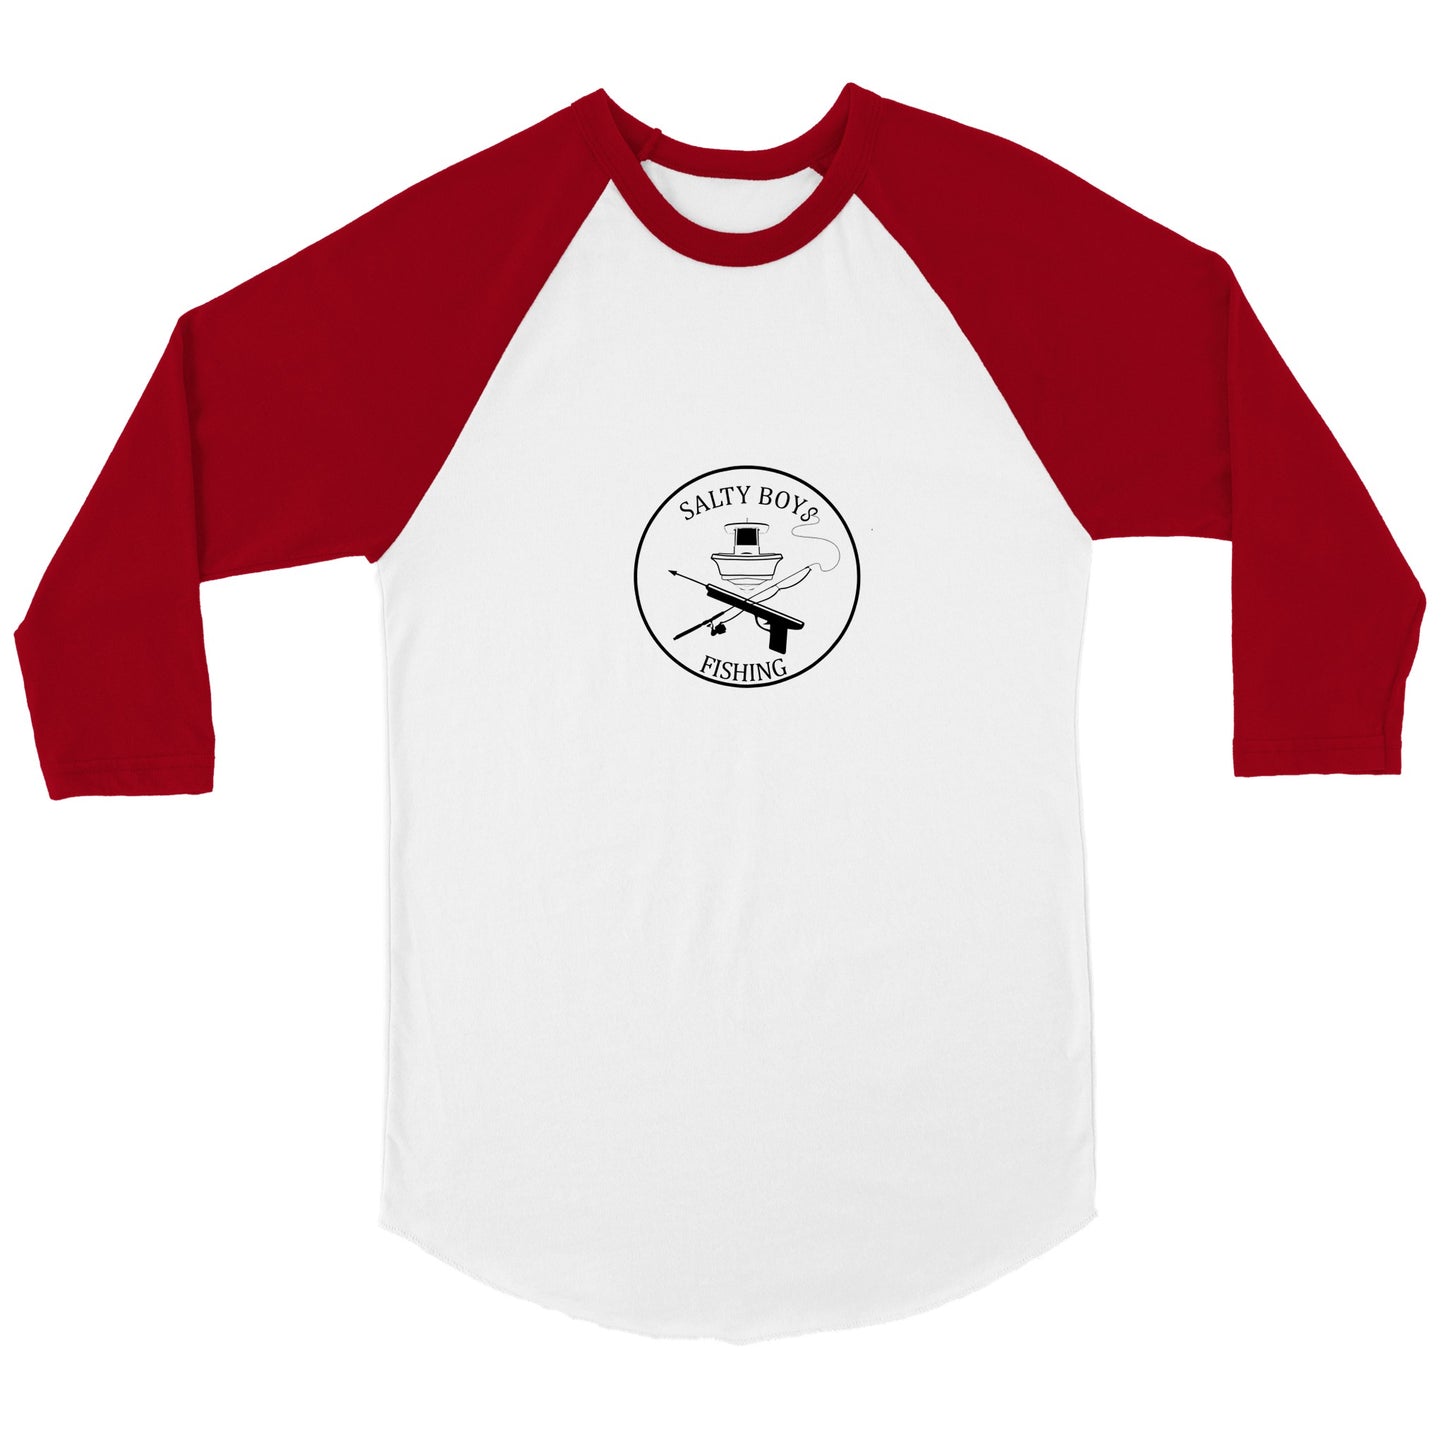 Salty boys Baseball Style T-shirt